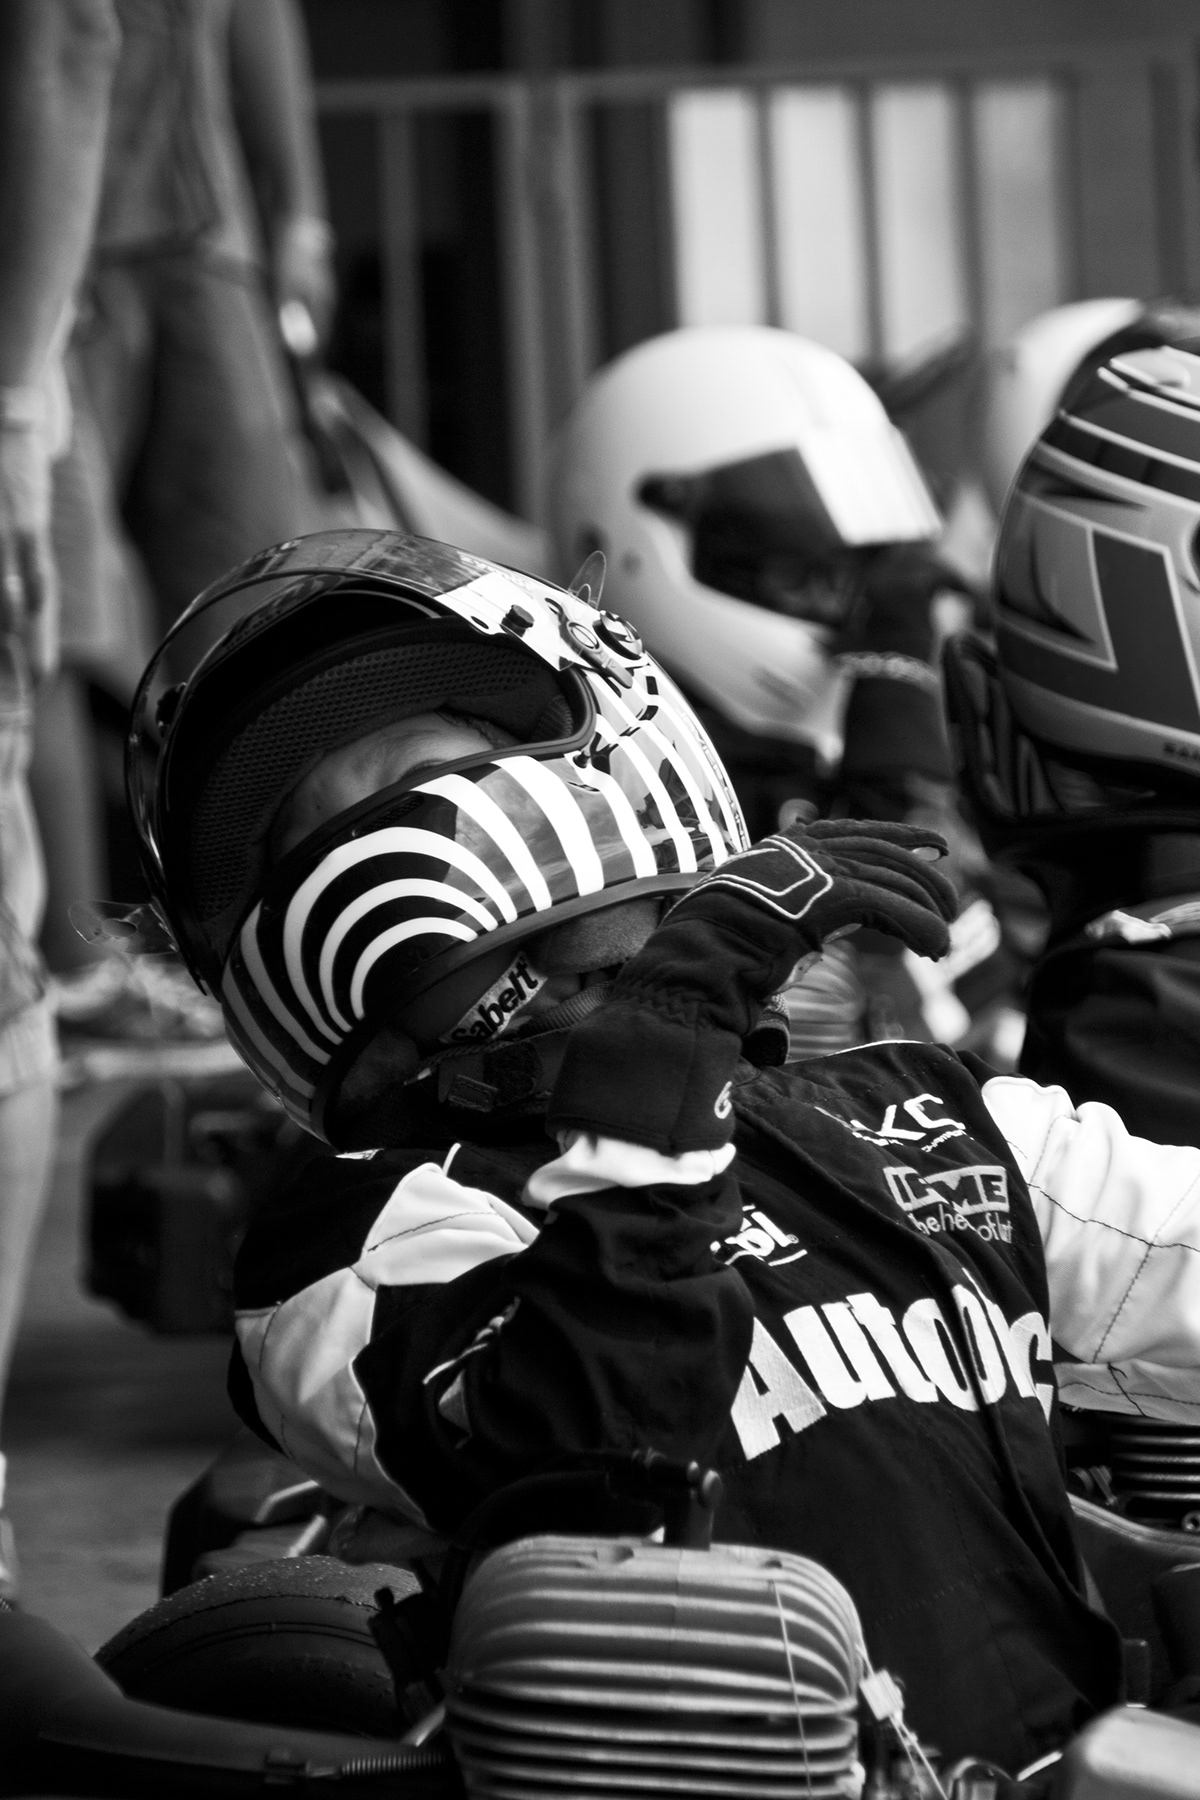 black and white race kart Racing